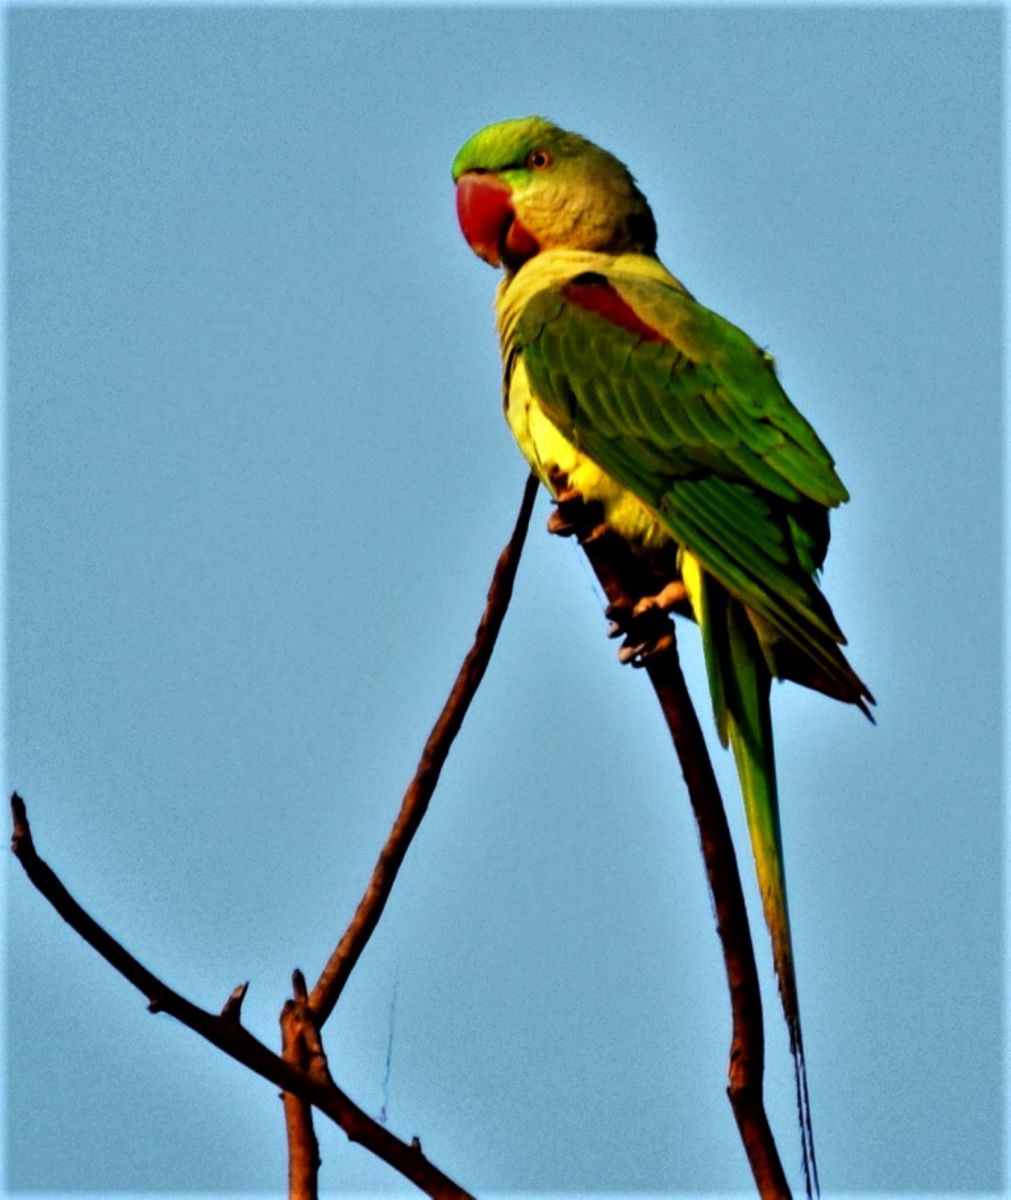 Bird hunted for sale as pets 1 :Alexandrine parakeet